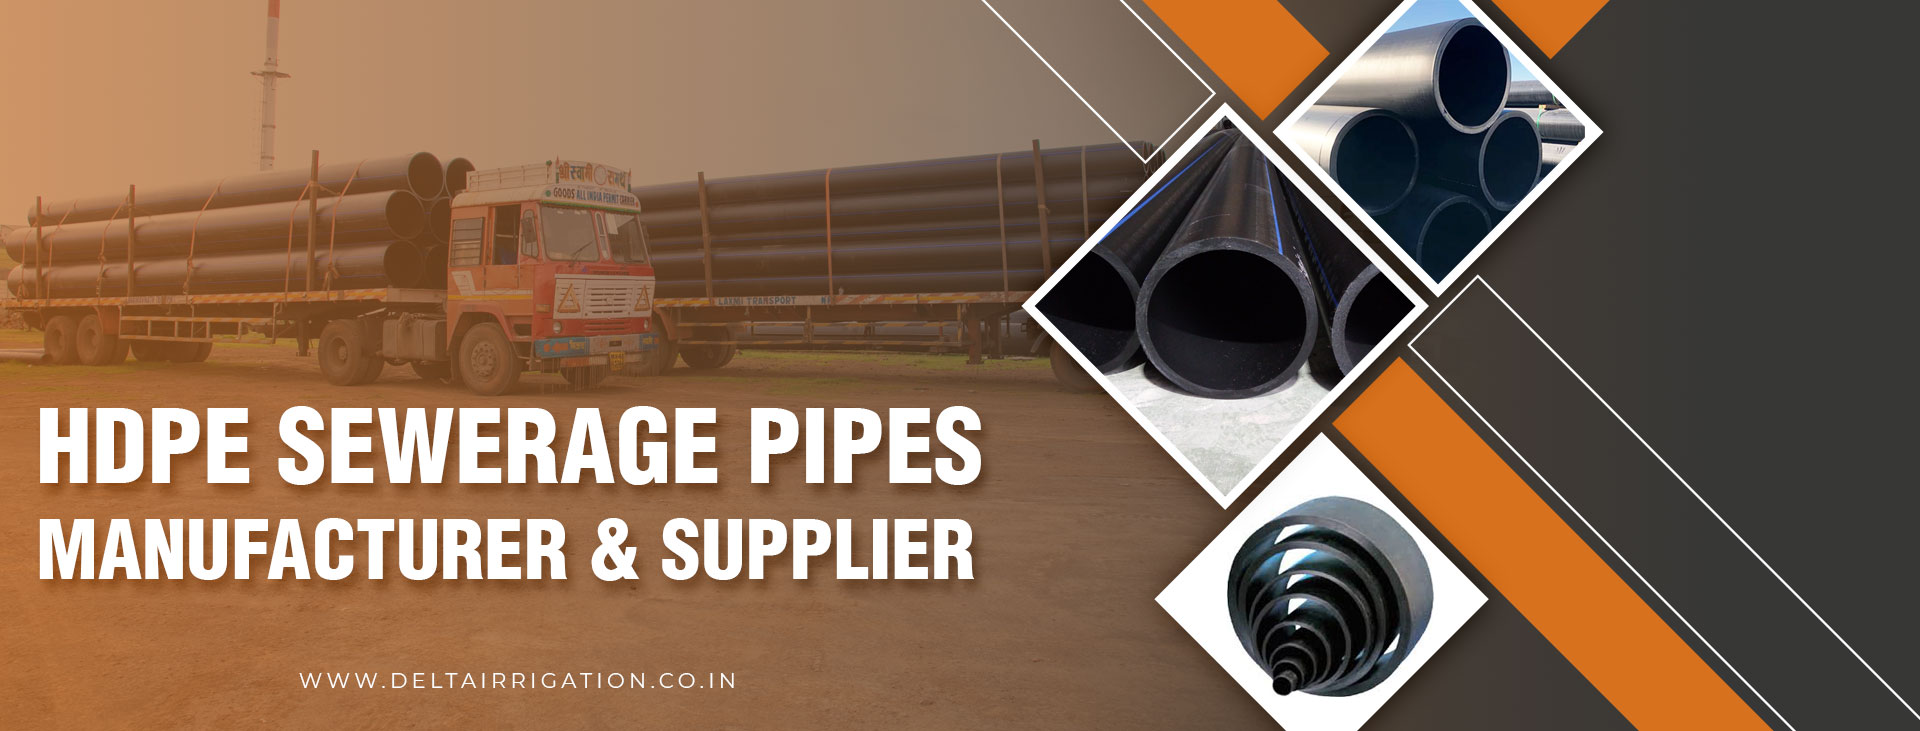 HDPE Sewerage Pipes Manufacturer & Supplier / Sewerage / Waste Water Conveyance